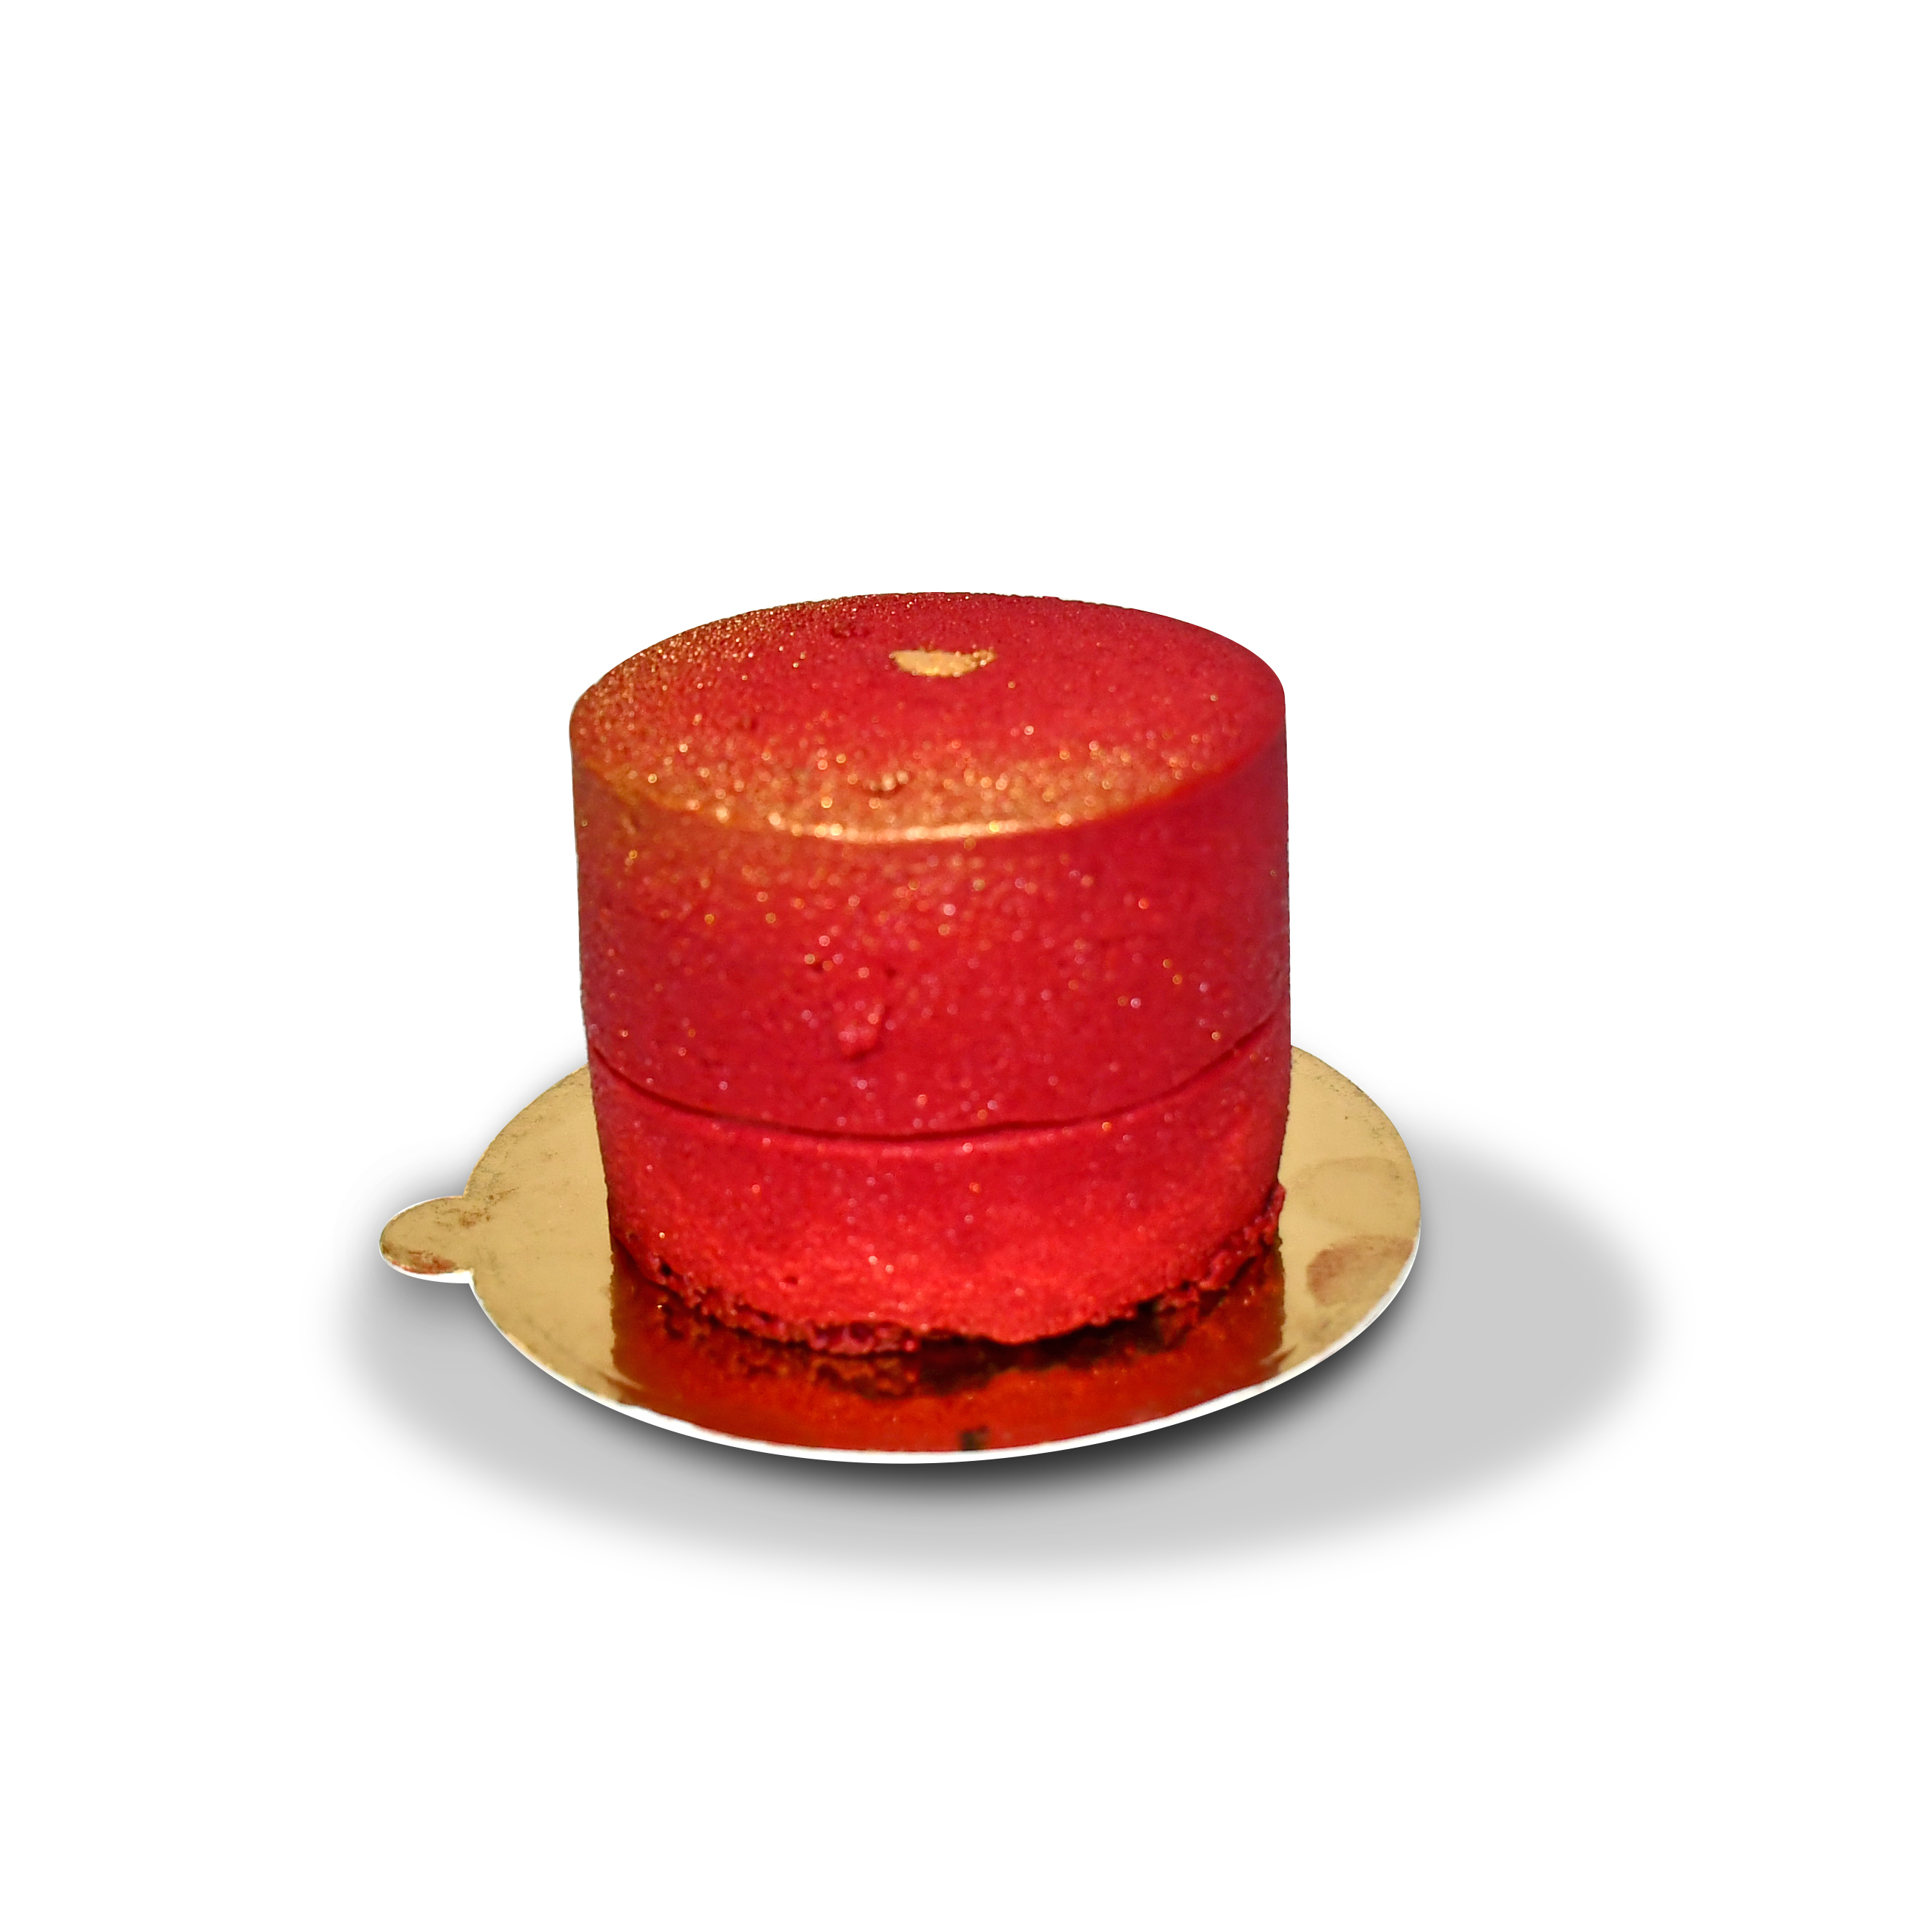 Top 72+ merwans cake malad latest - awesomeenglish.edu.vn